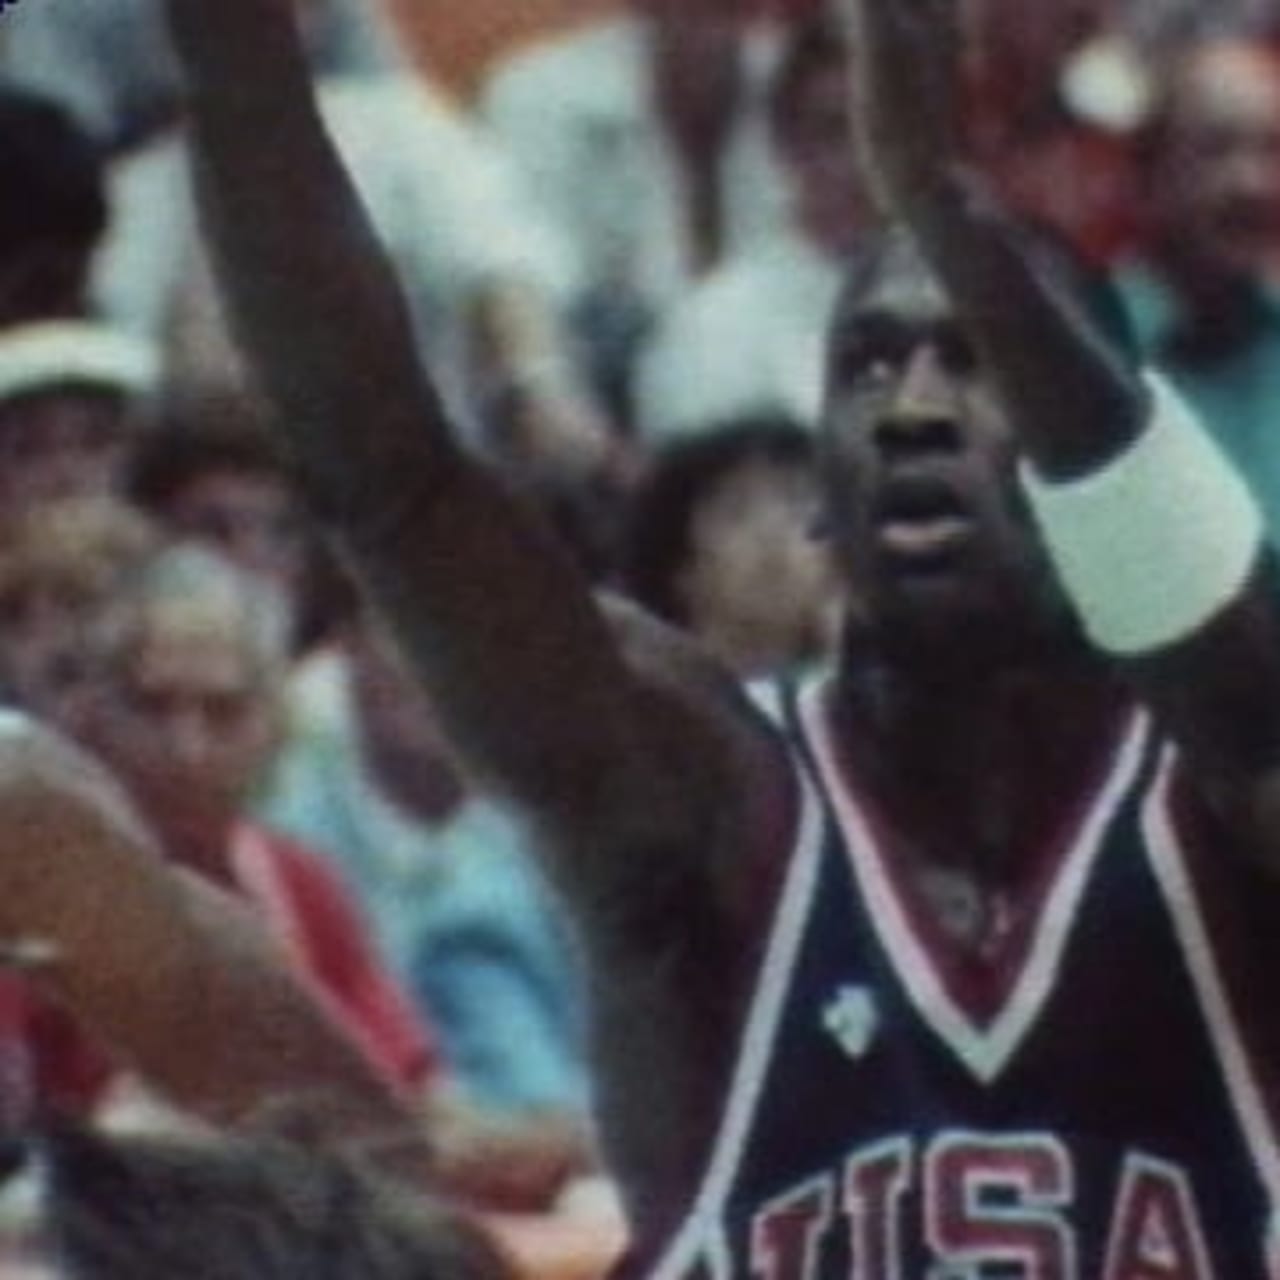 The man who motivated Michael Jordan, Sports